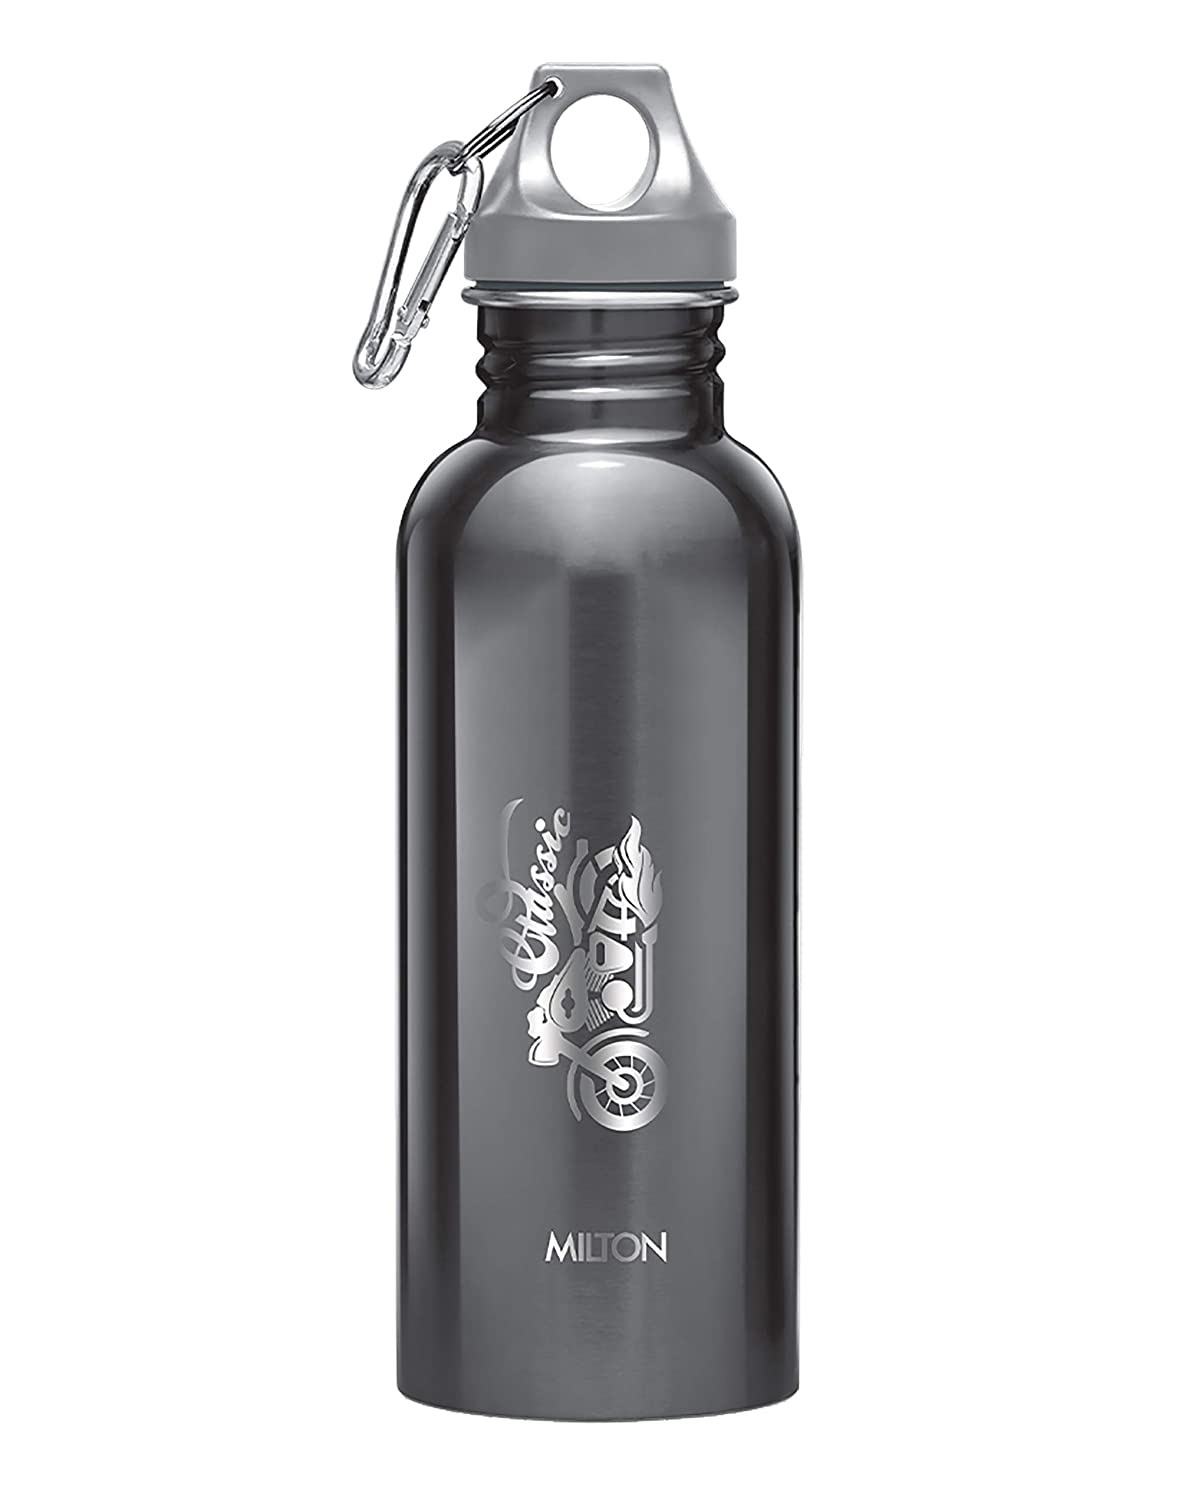 Milton Stainless Steel Water bottle